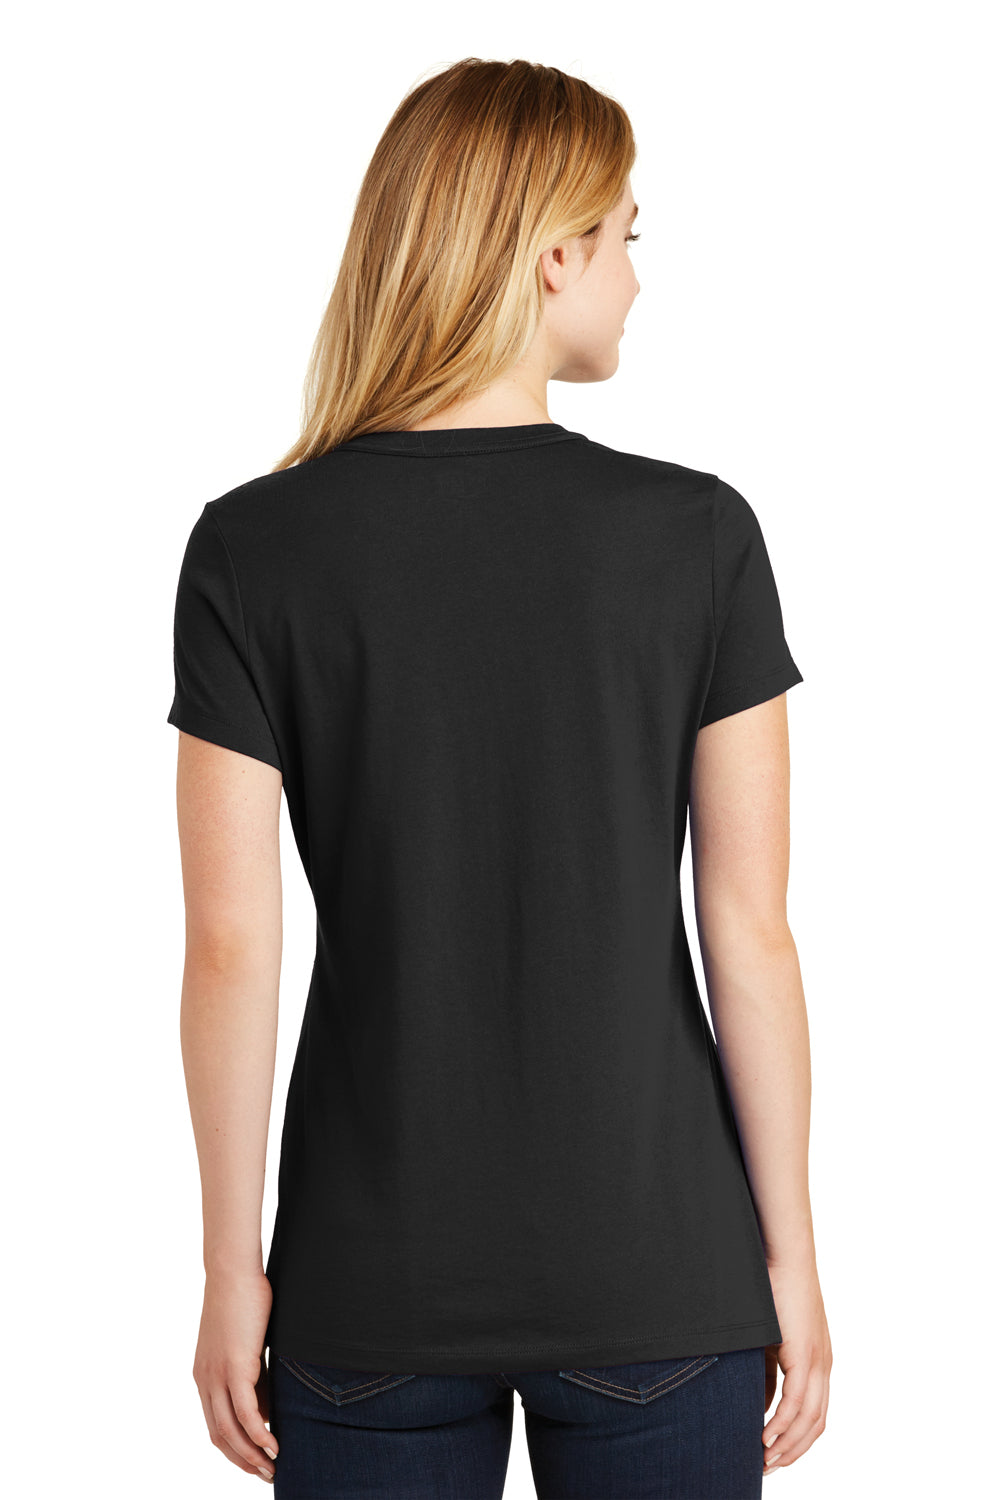 New Era LNEA100 Womens Heritage Short Sleeve Crewneck T-Shirt Black Back